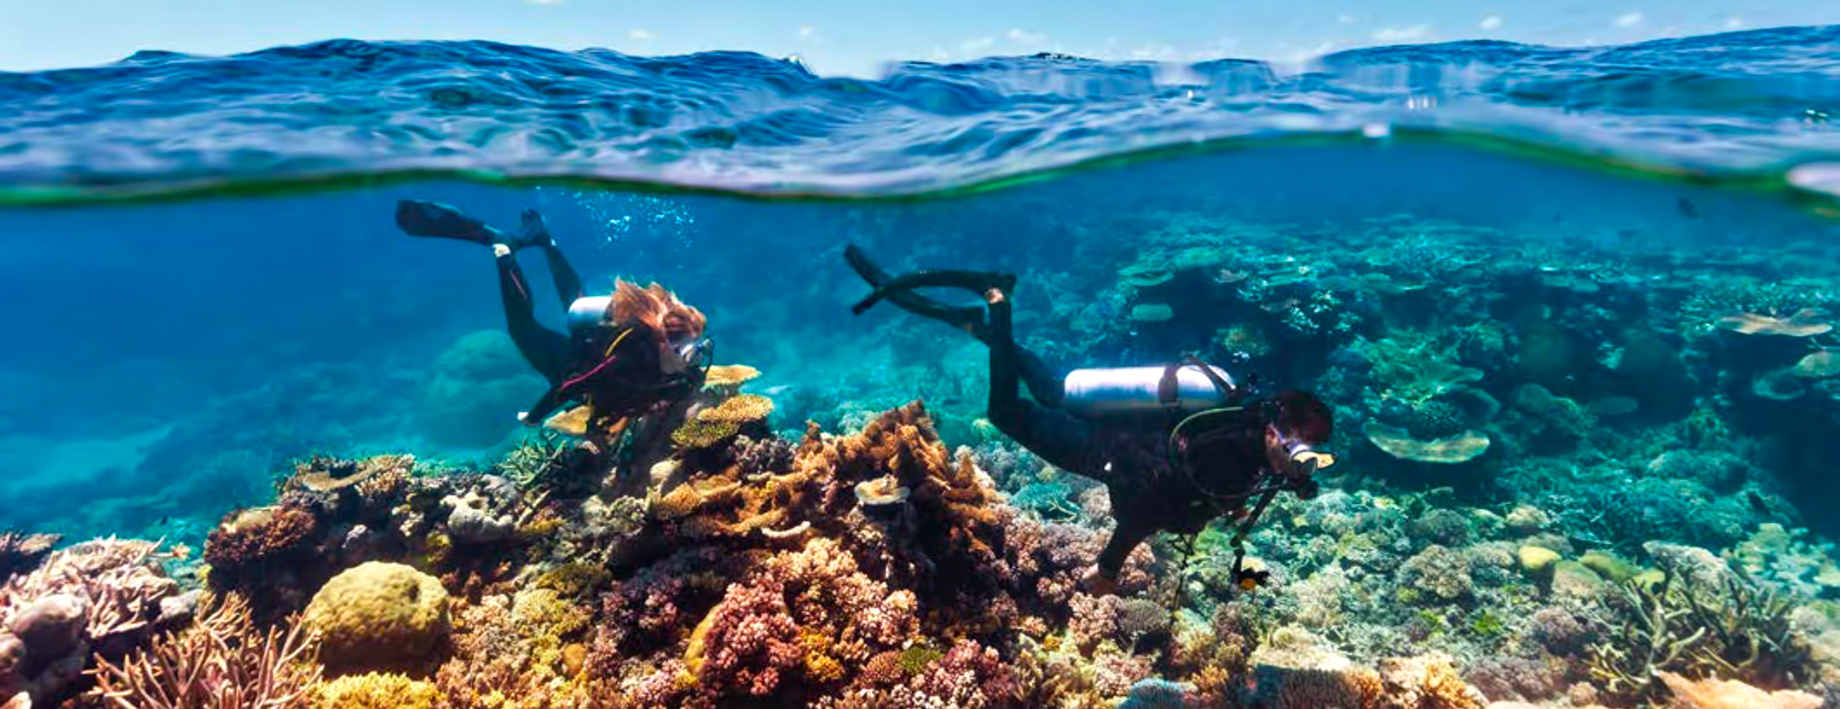 InterContinental Hayman Island Resort – Whitsunday Islands, Australia – Scuba Diving Corel Reef